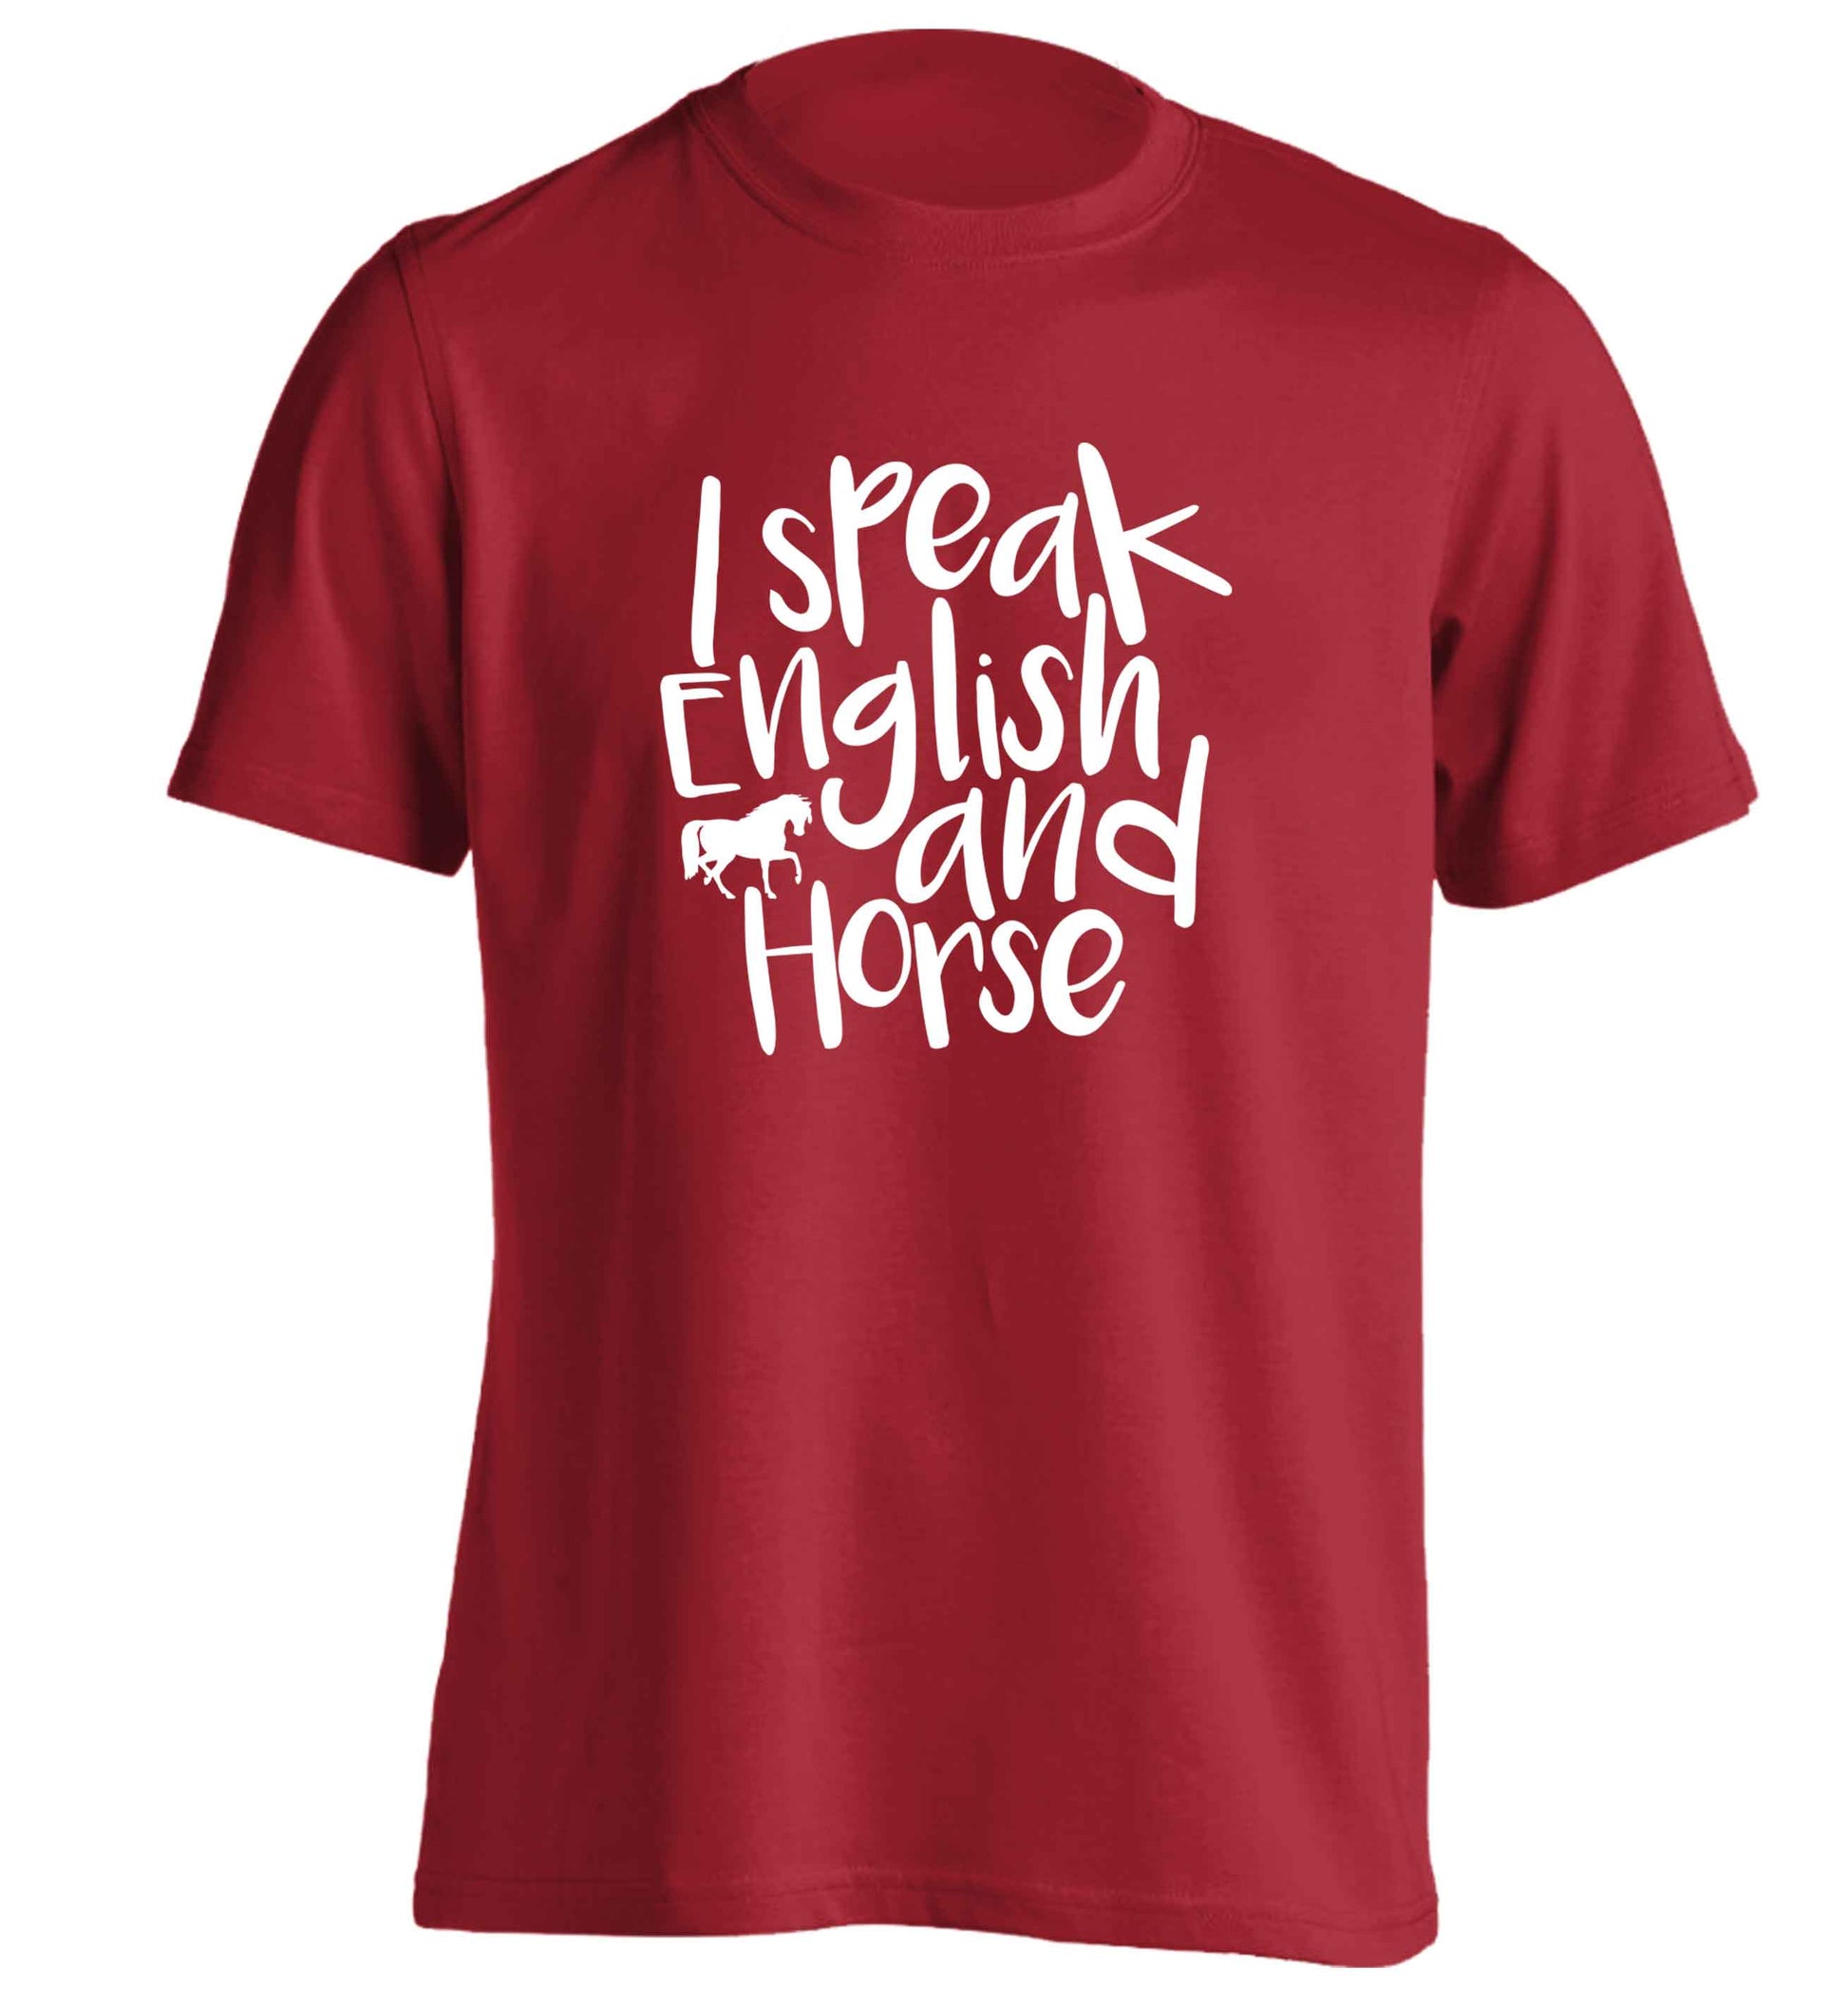 I speak English and horse adults unisex red Tshirt 2XL